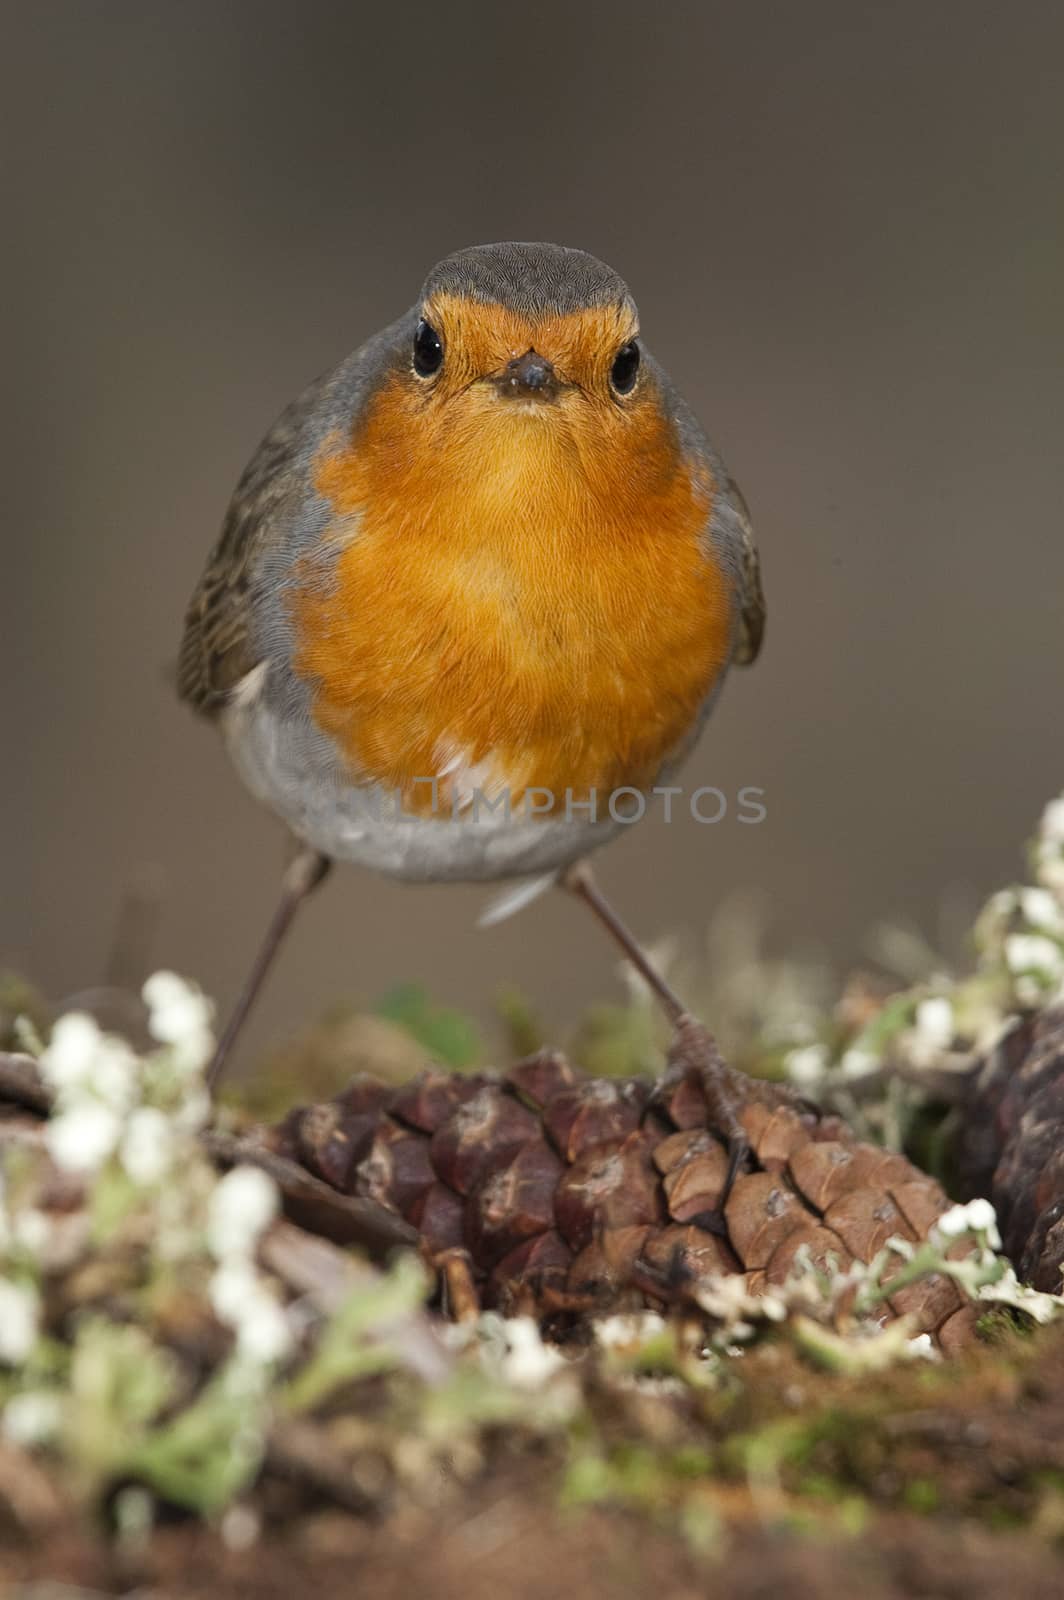 Robin - Erithacus rubecula, bird close-up  by jalonsohu@gmail.com